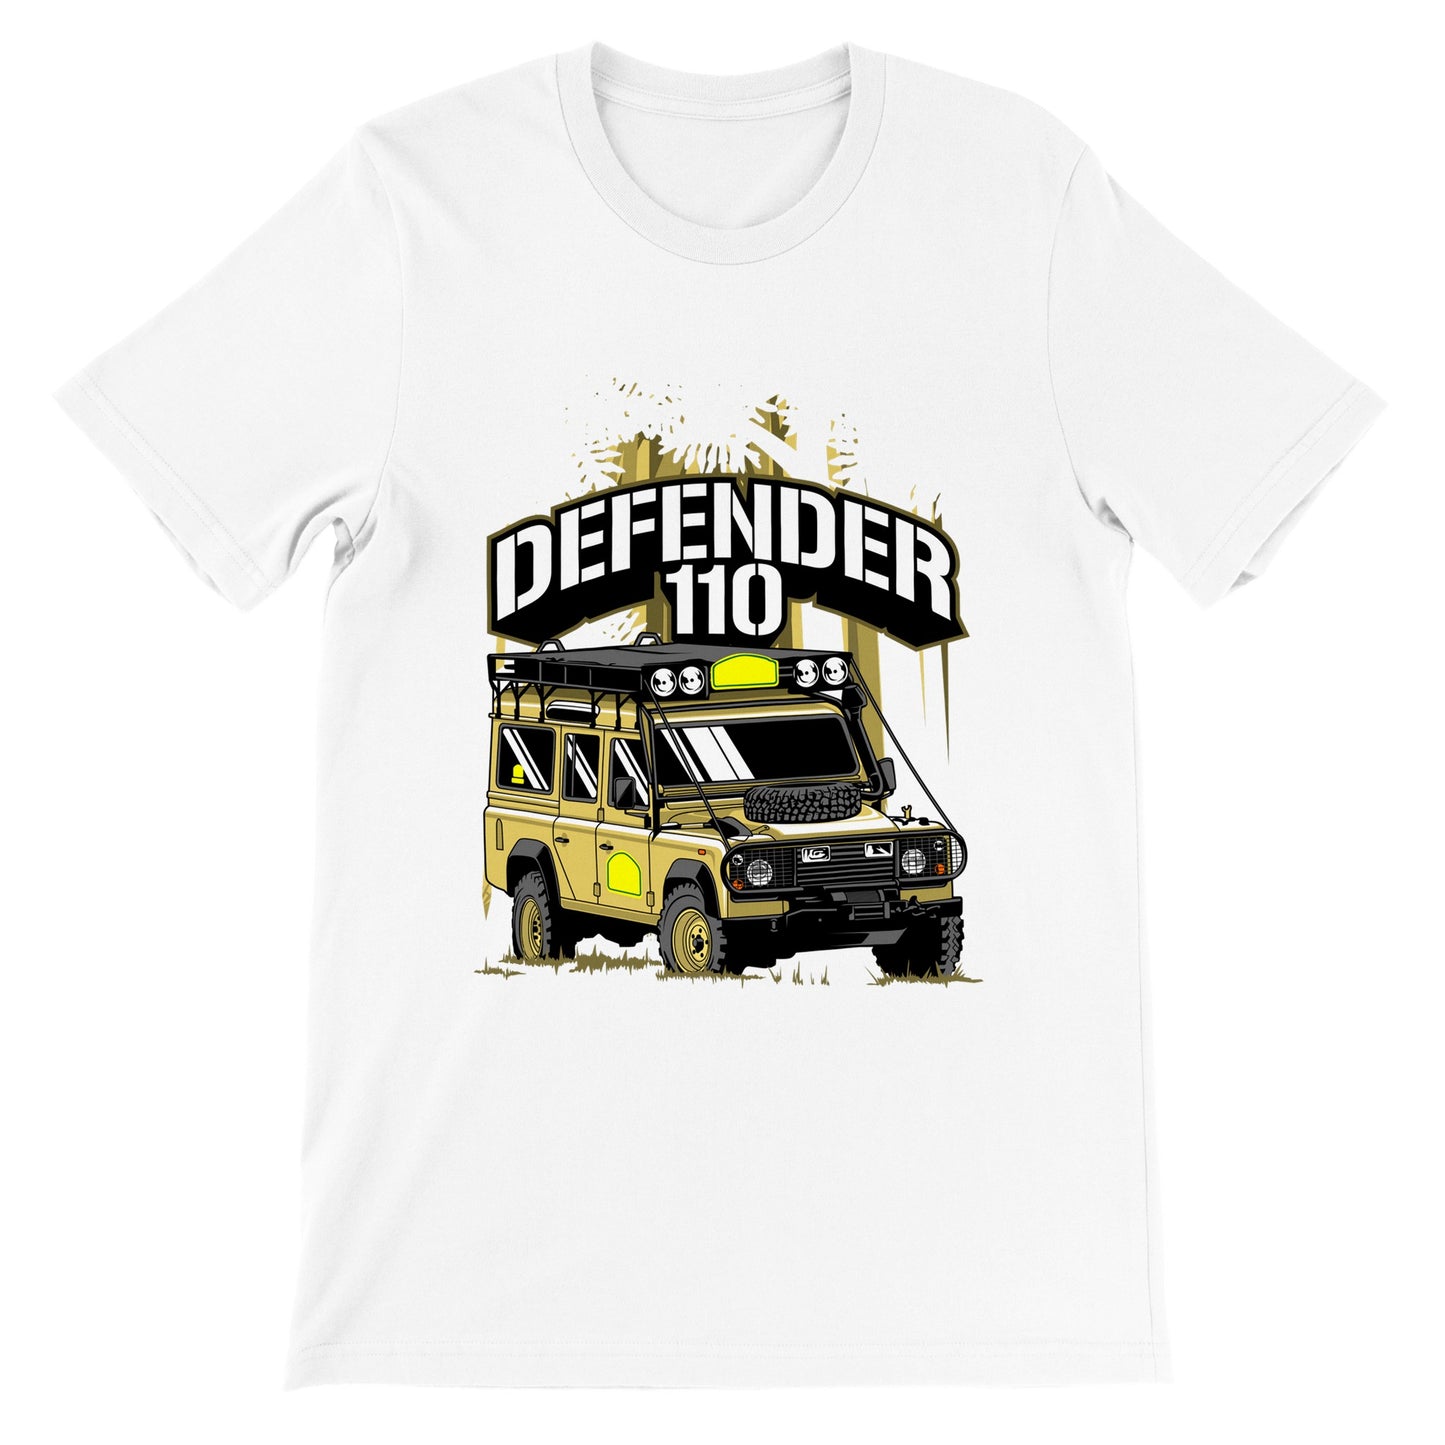 Car T-shirt - The Defender 110 - Artwork - Premium Unisex T-shirt